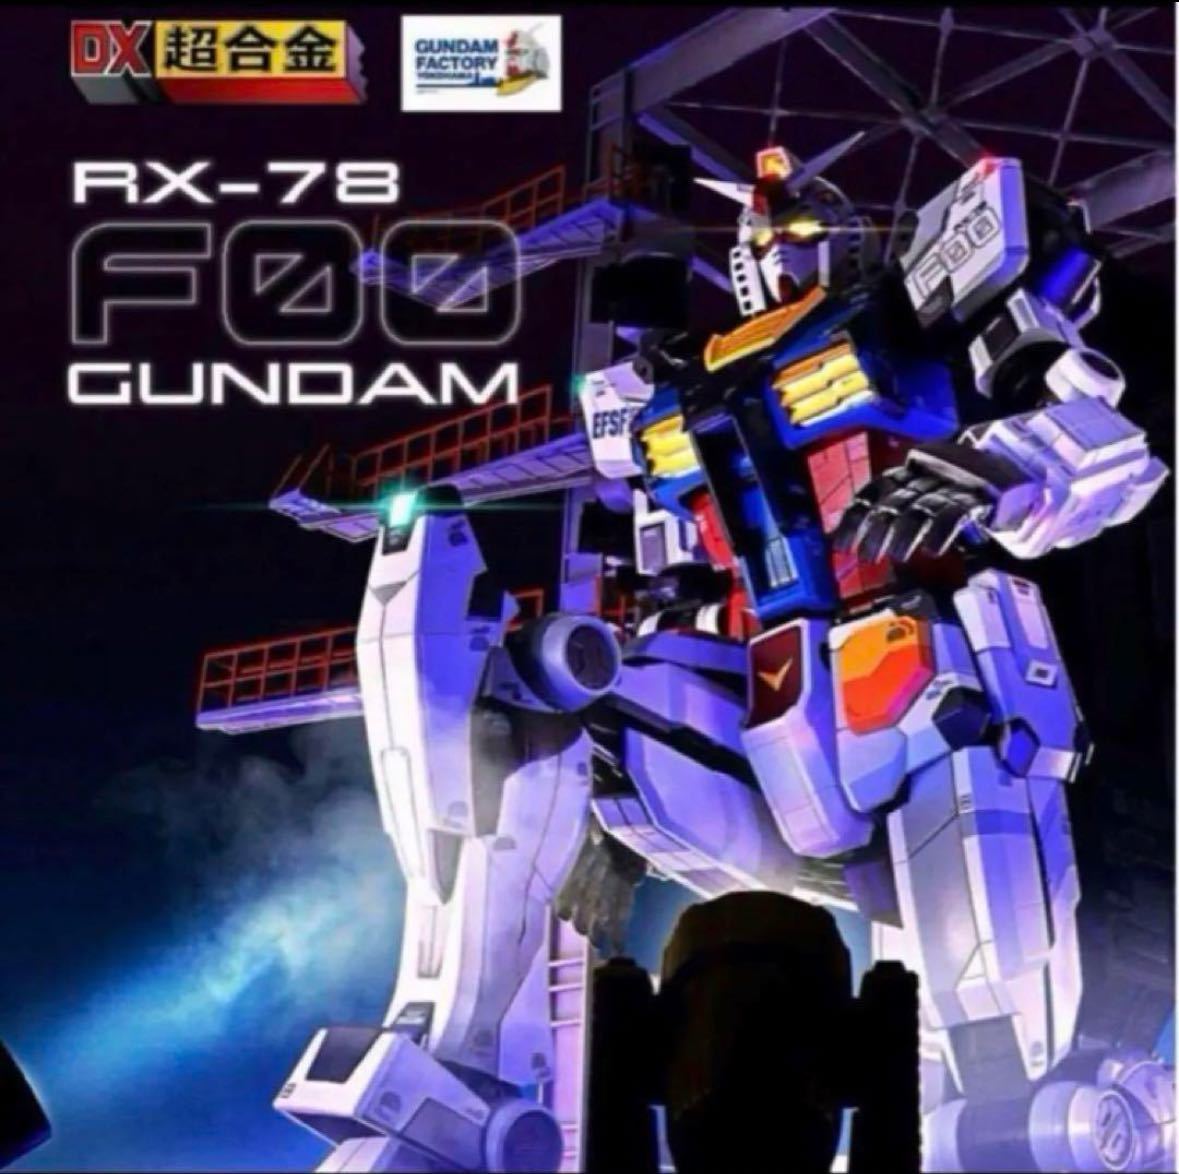 DX超合金 GUNDAM FACTORY YOKOHAMA RX-78F00ガンダム フィギュア